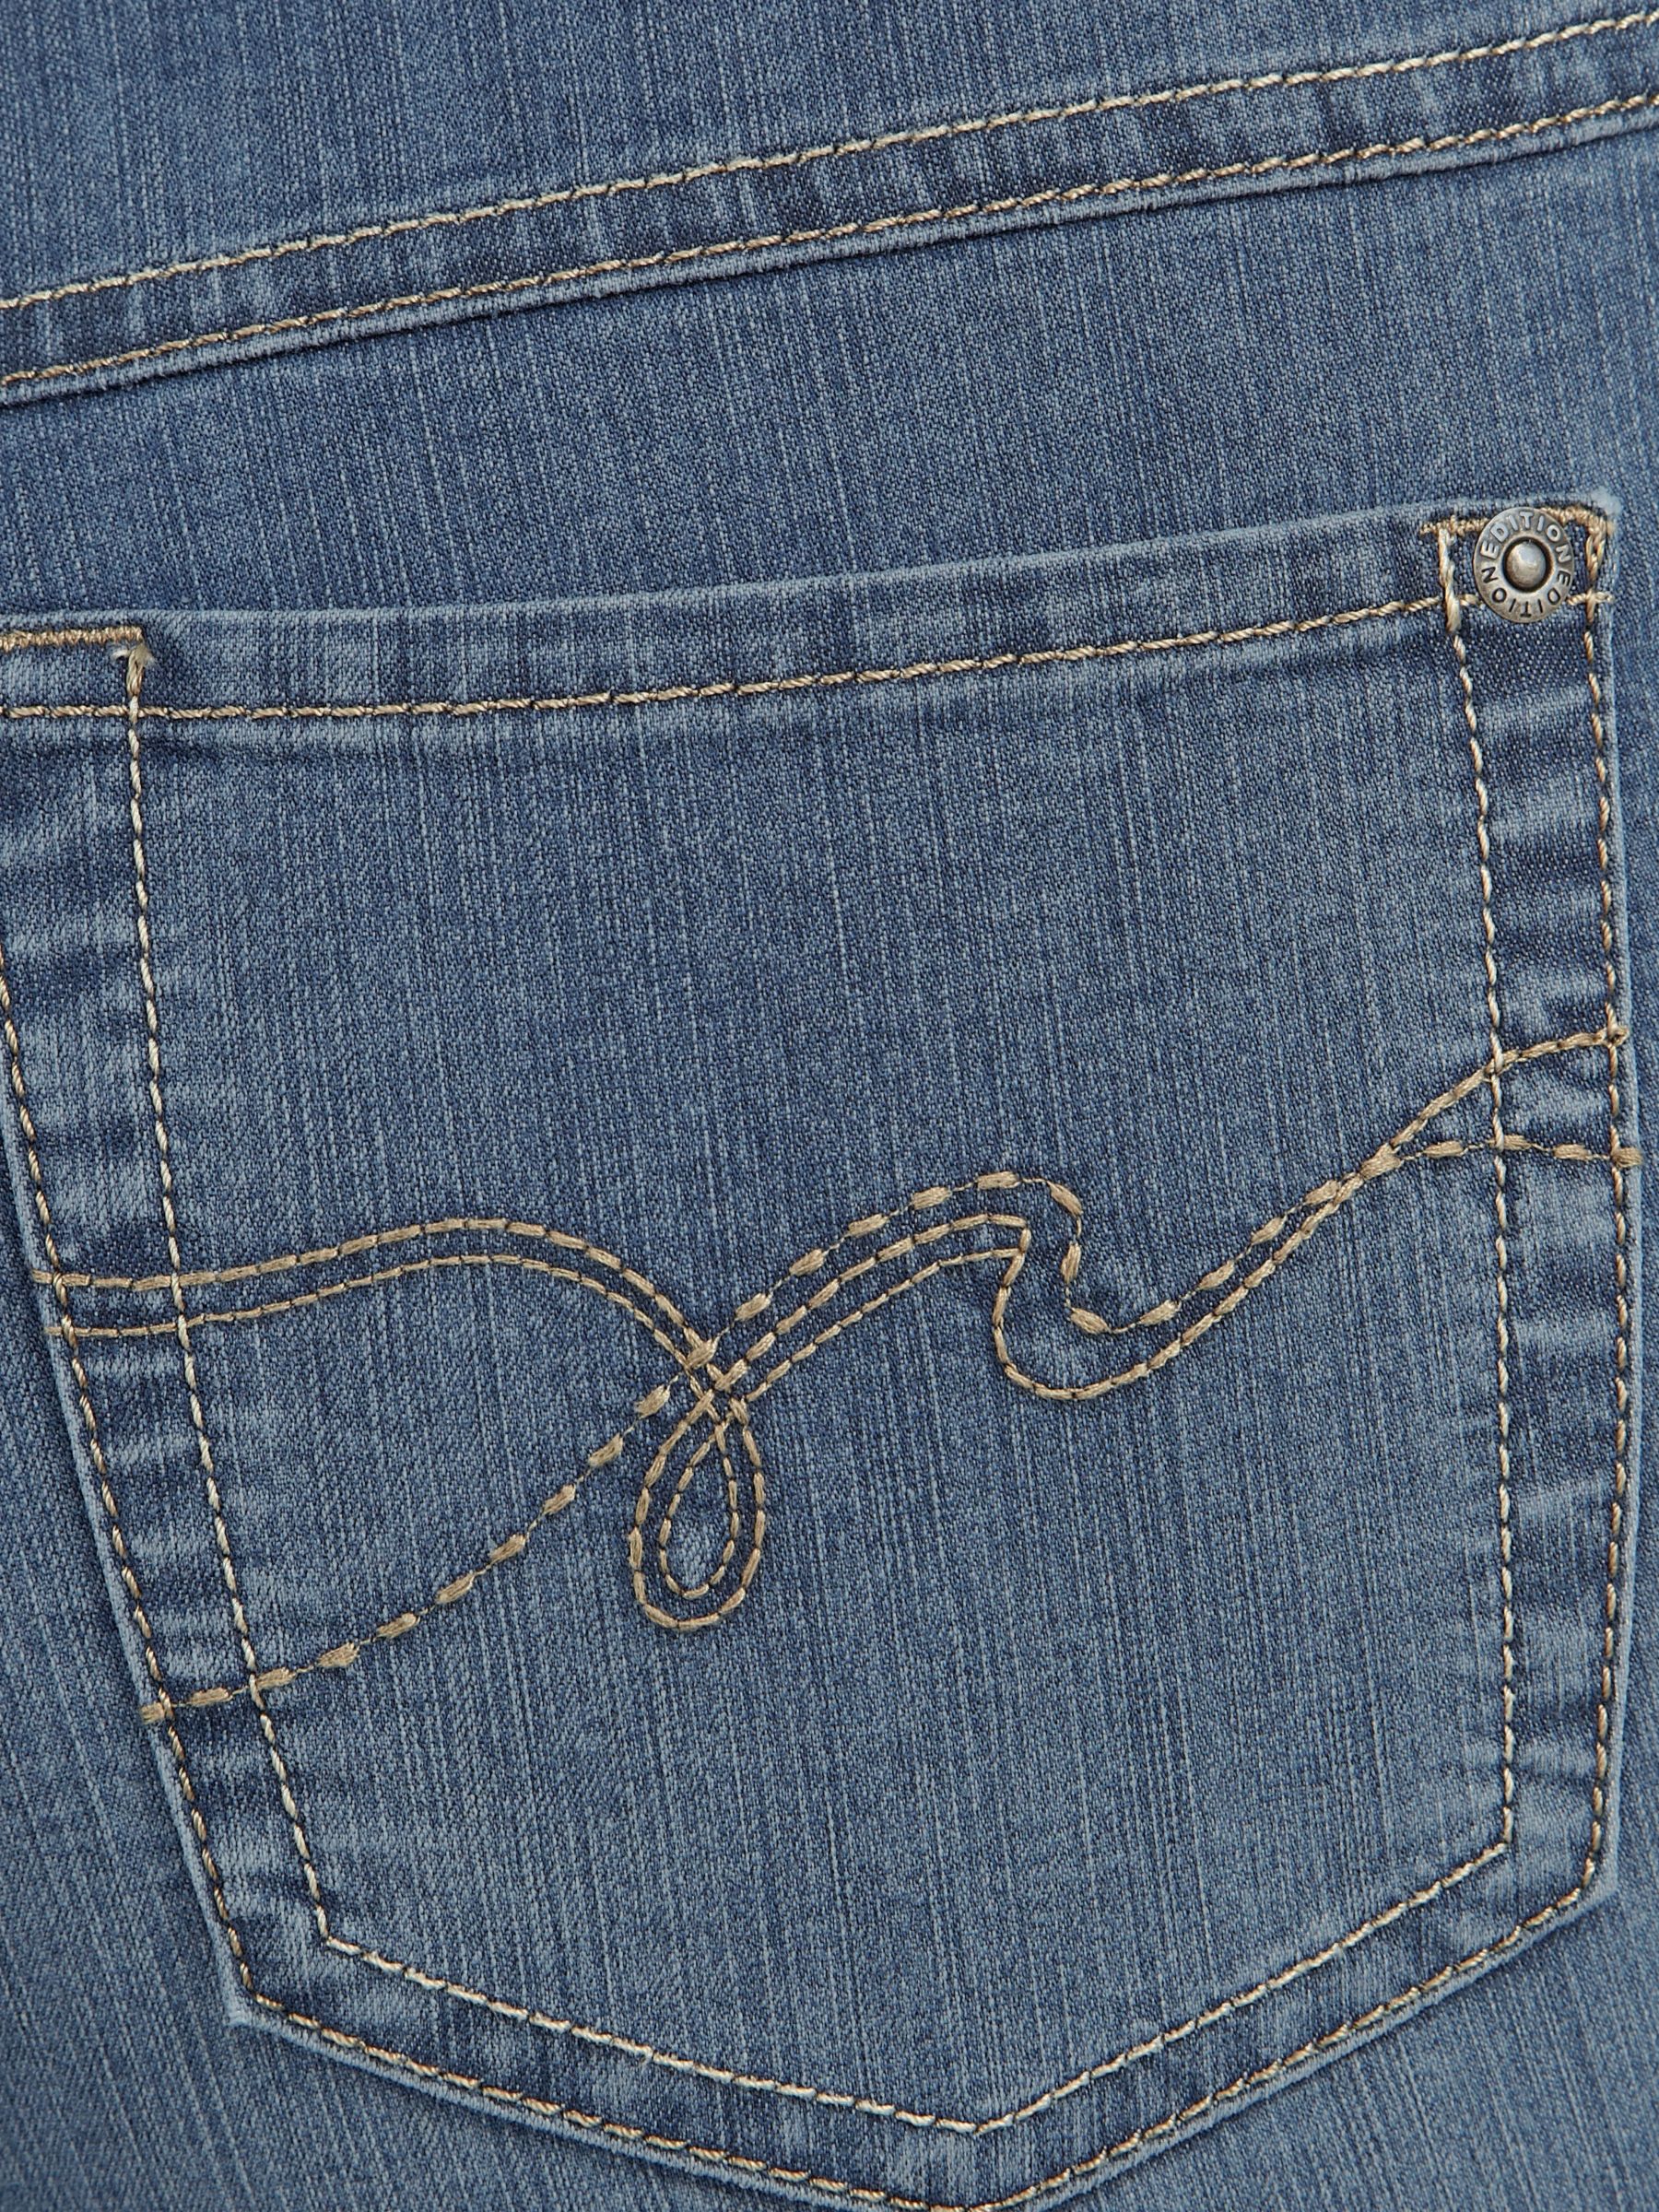 gerry weber jeans